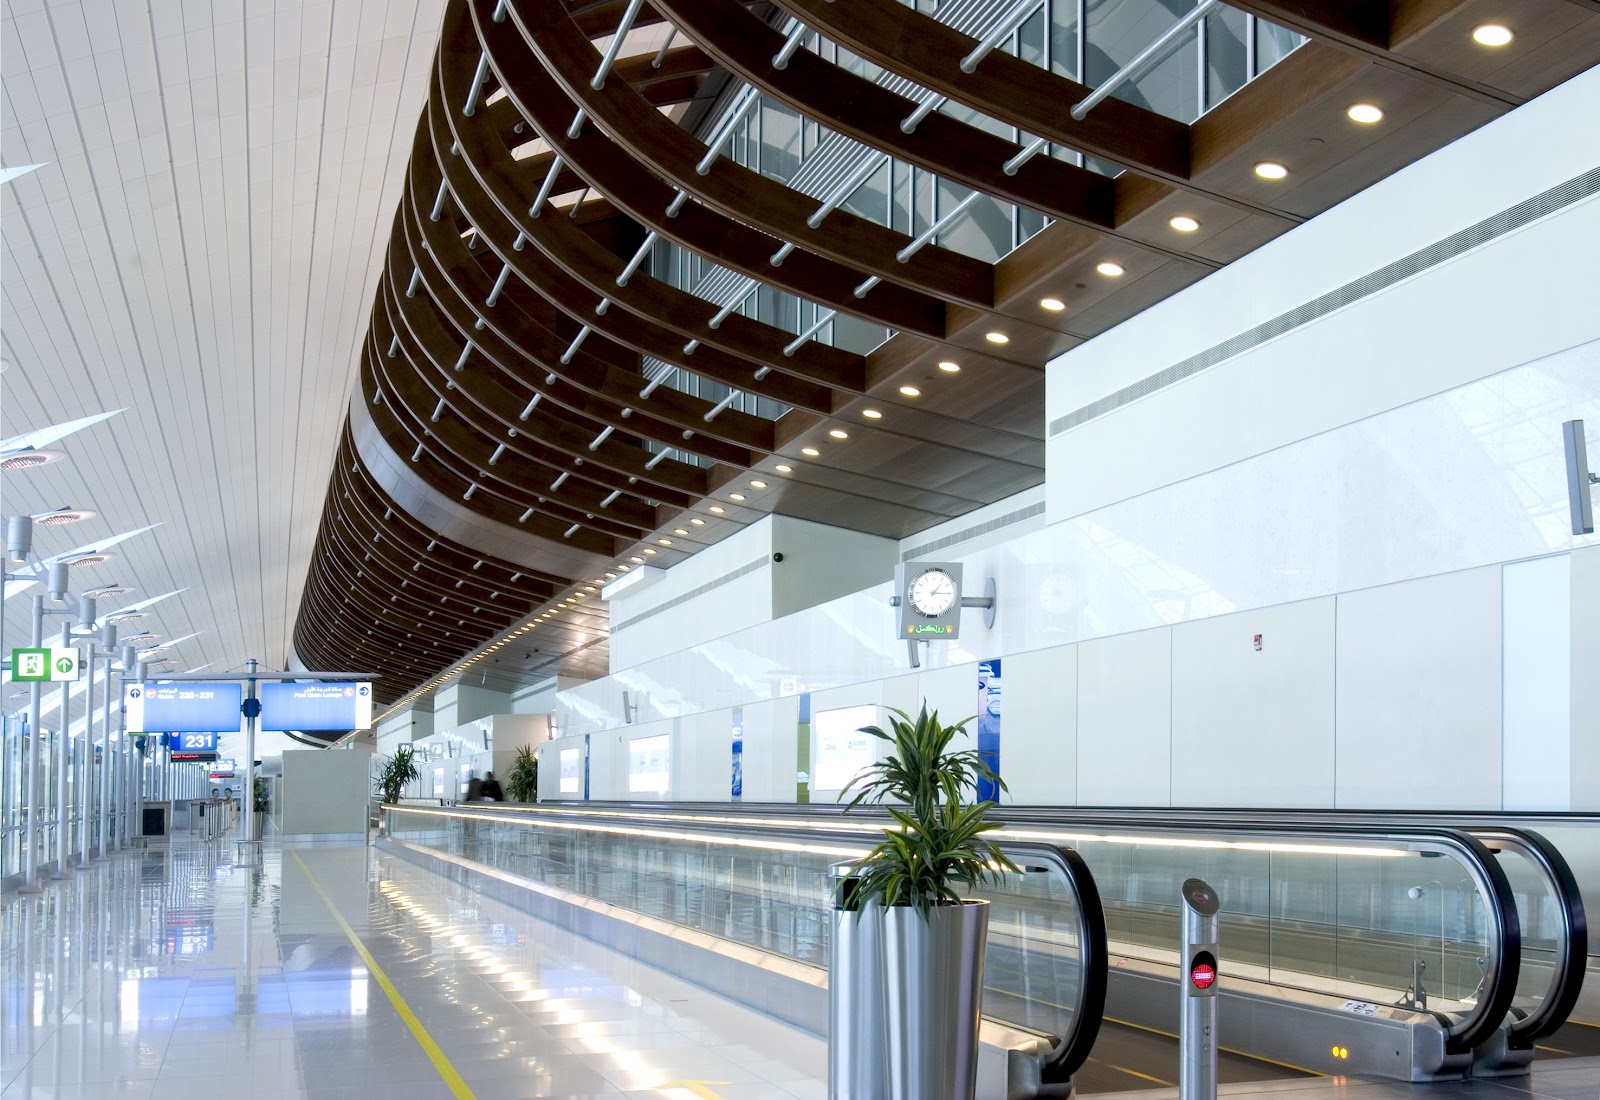 Dubai Hotel Airport: Dubai International Airport